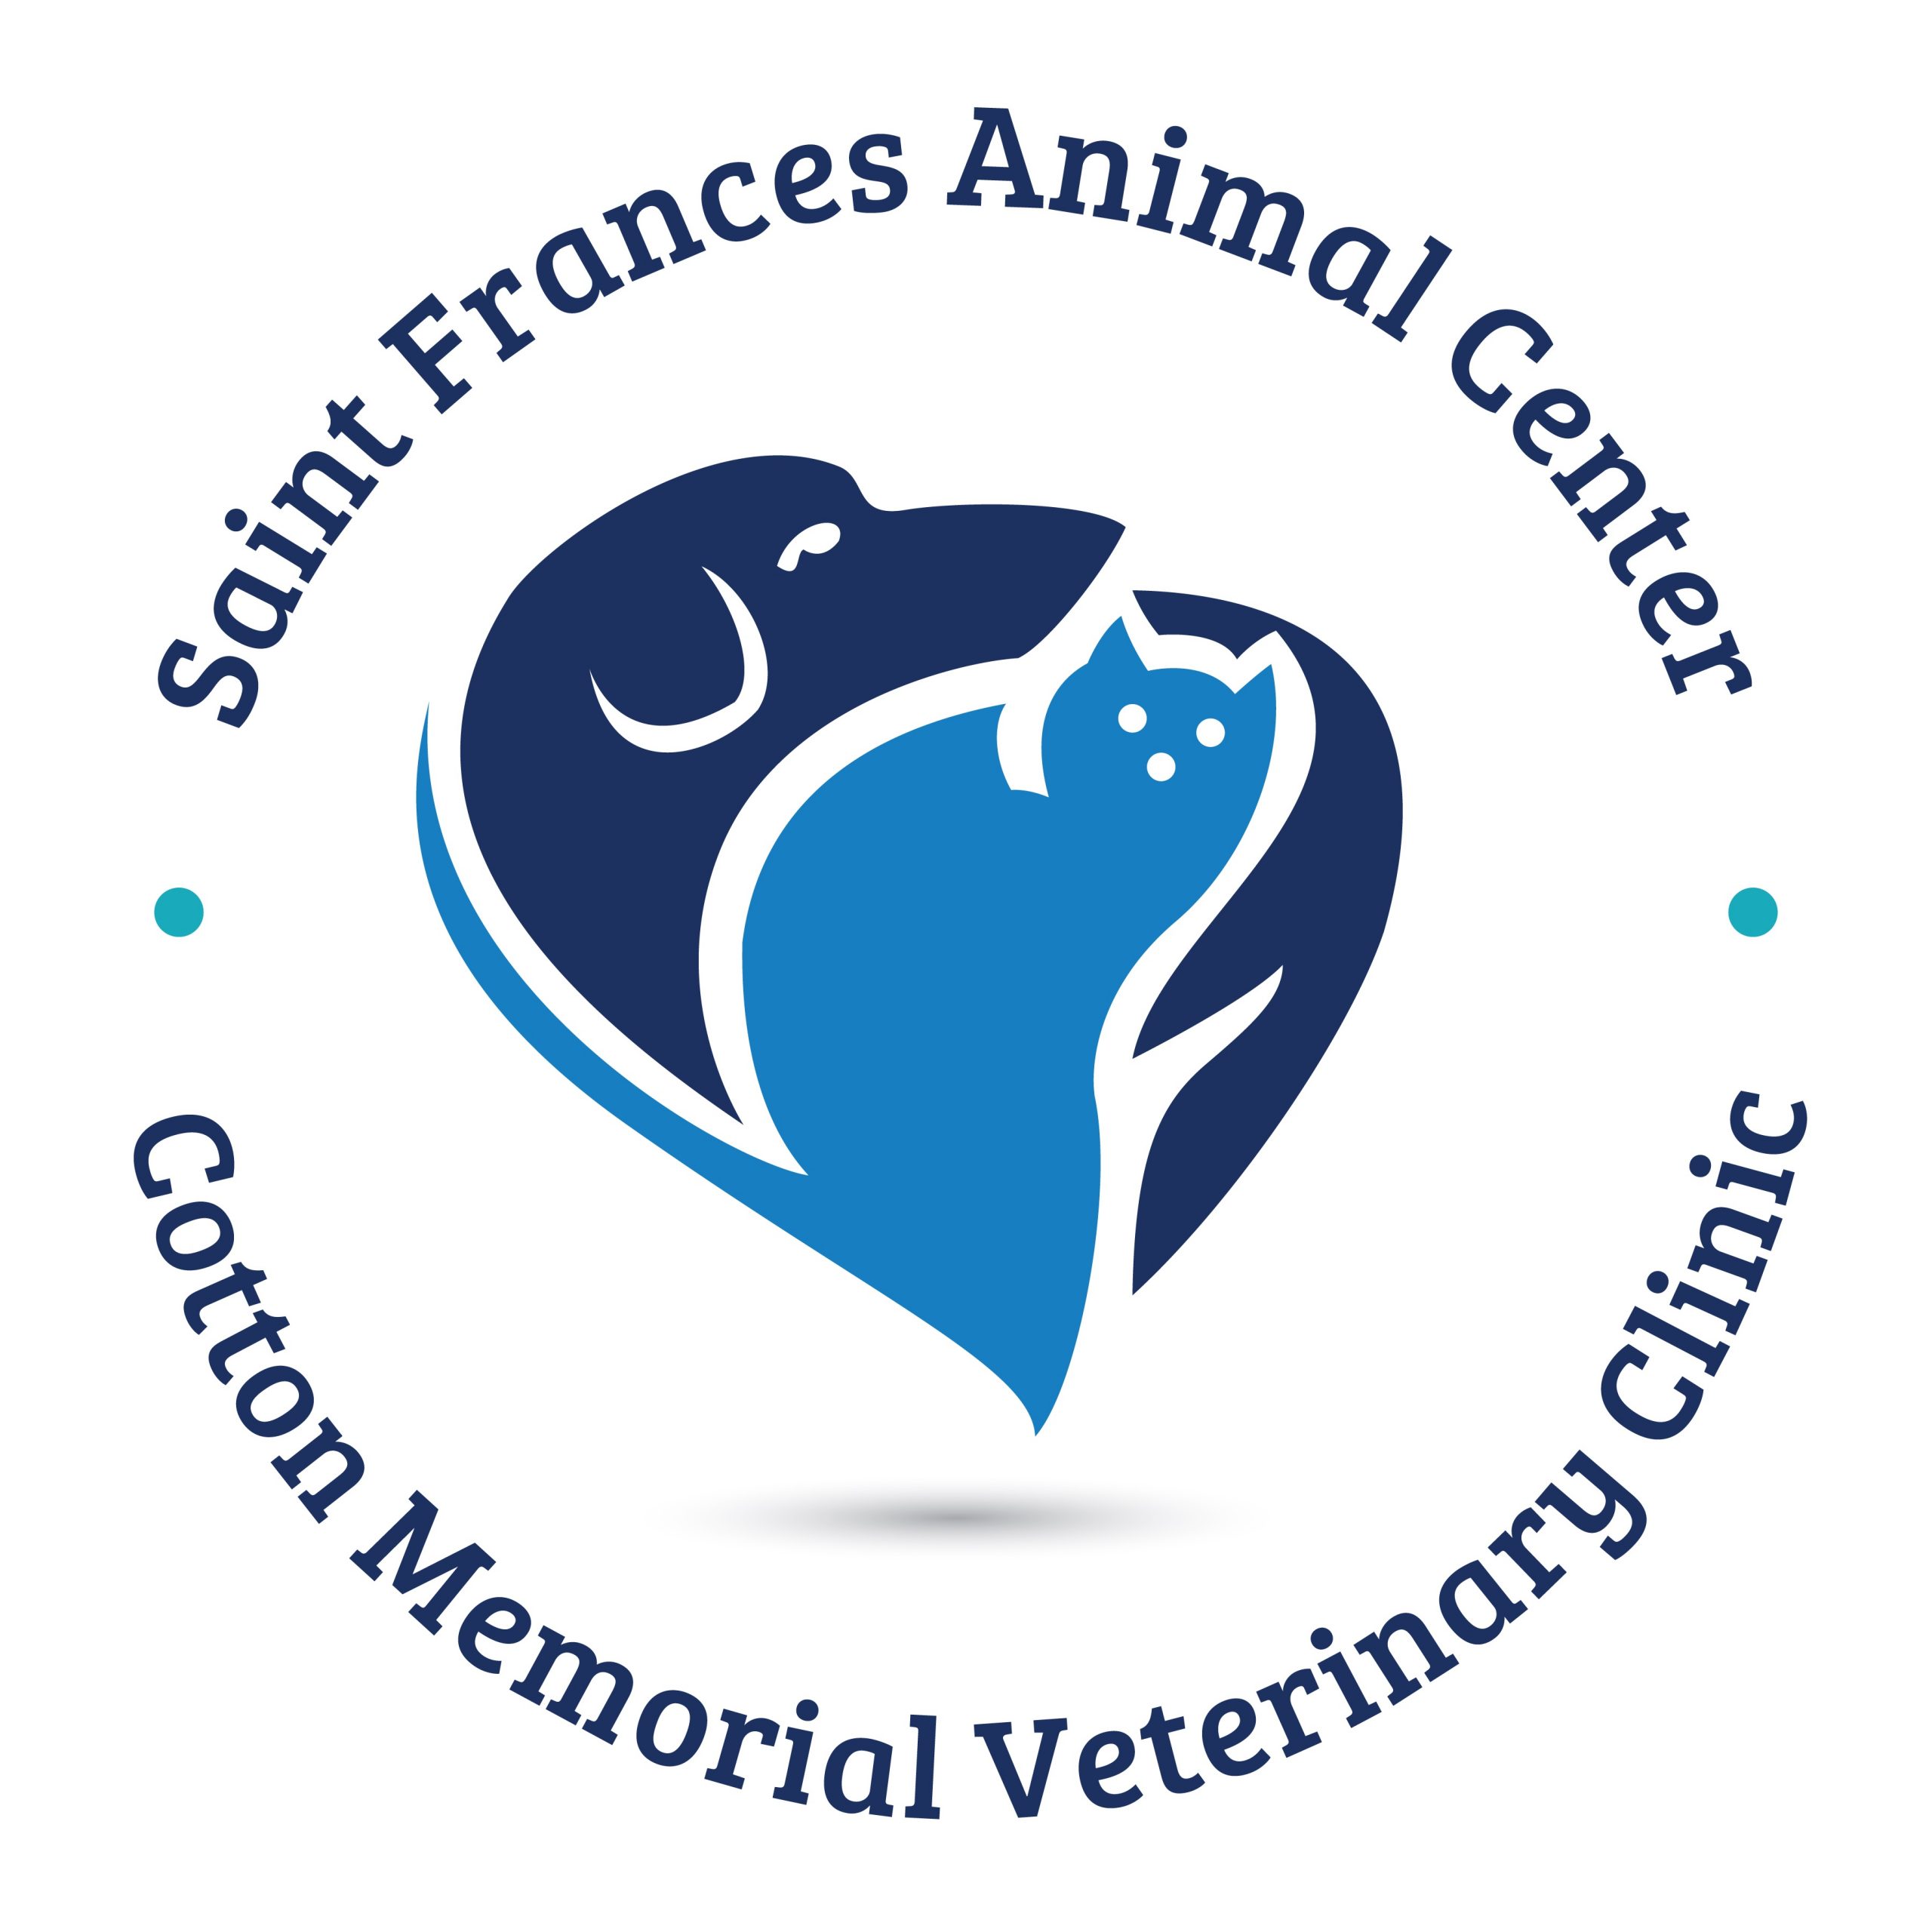 Saint Frances Animal Center